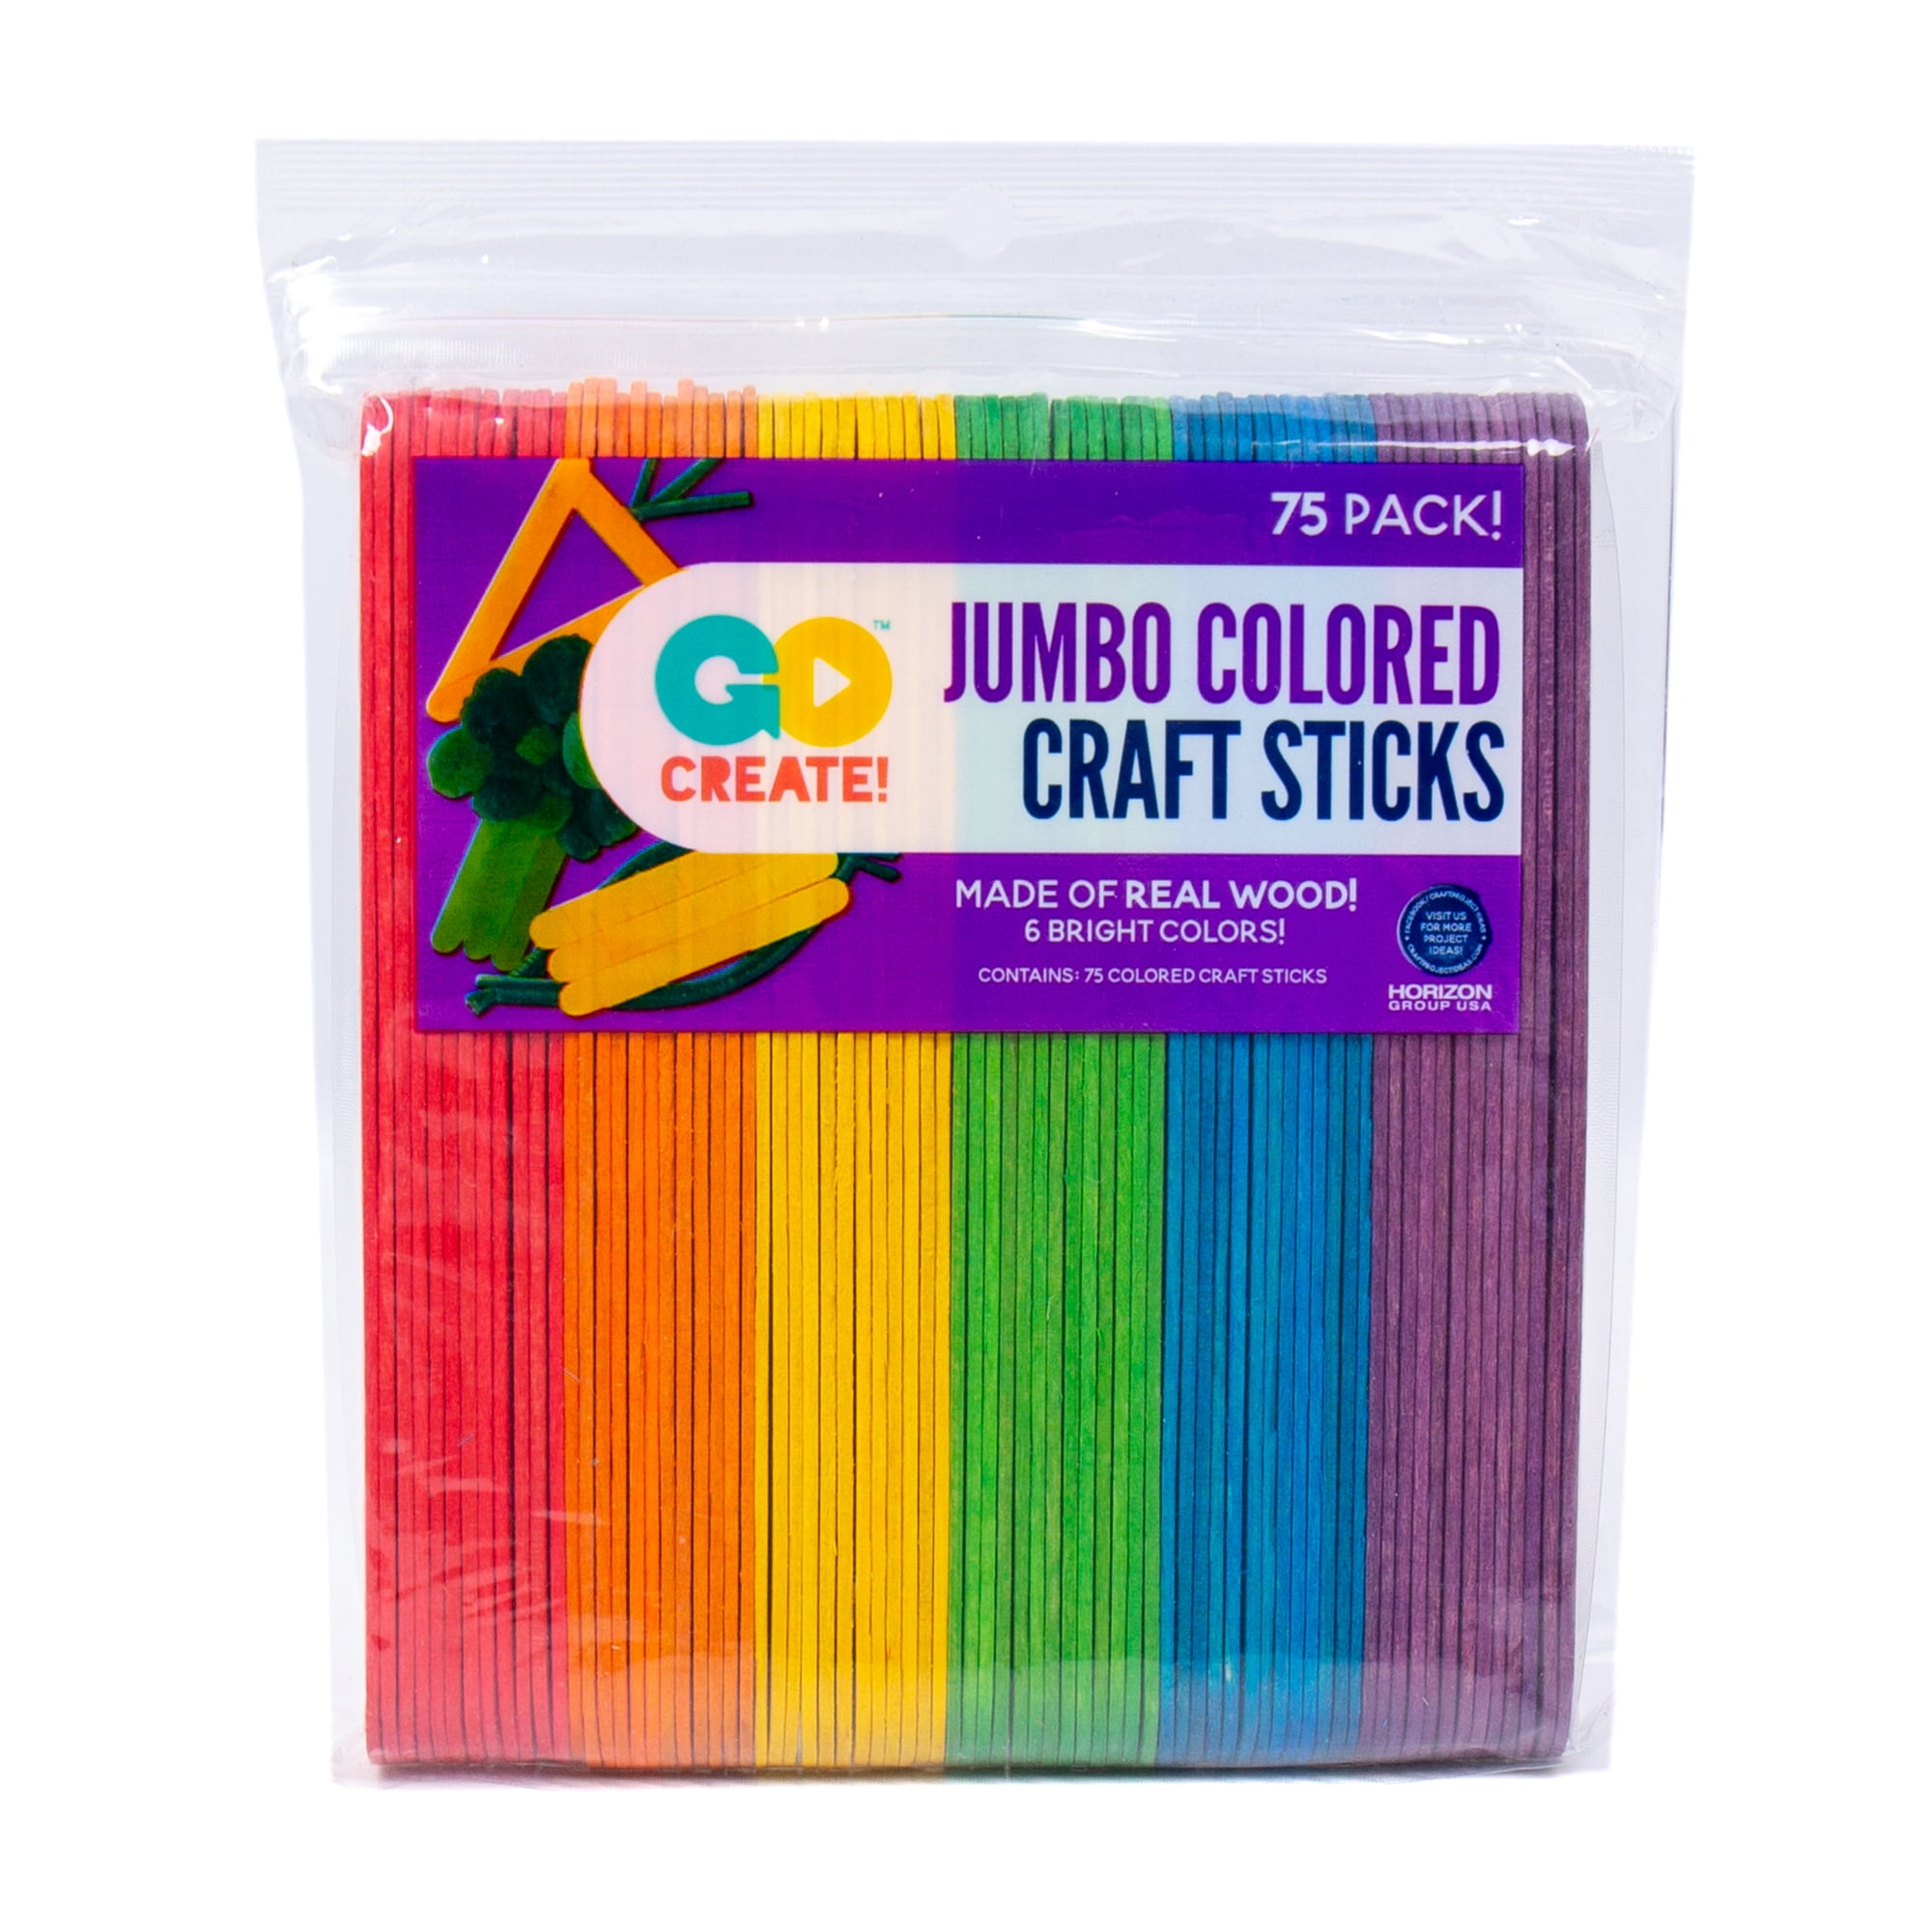 Jumbo Colored Craft Sticks at Lakeshore Learning